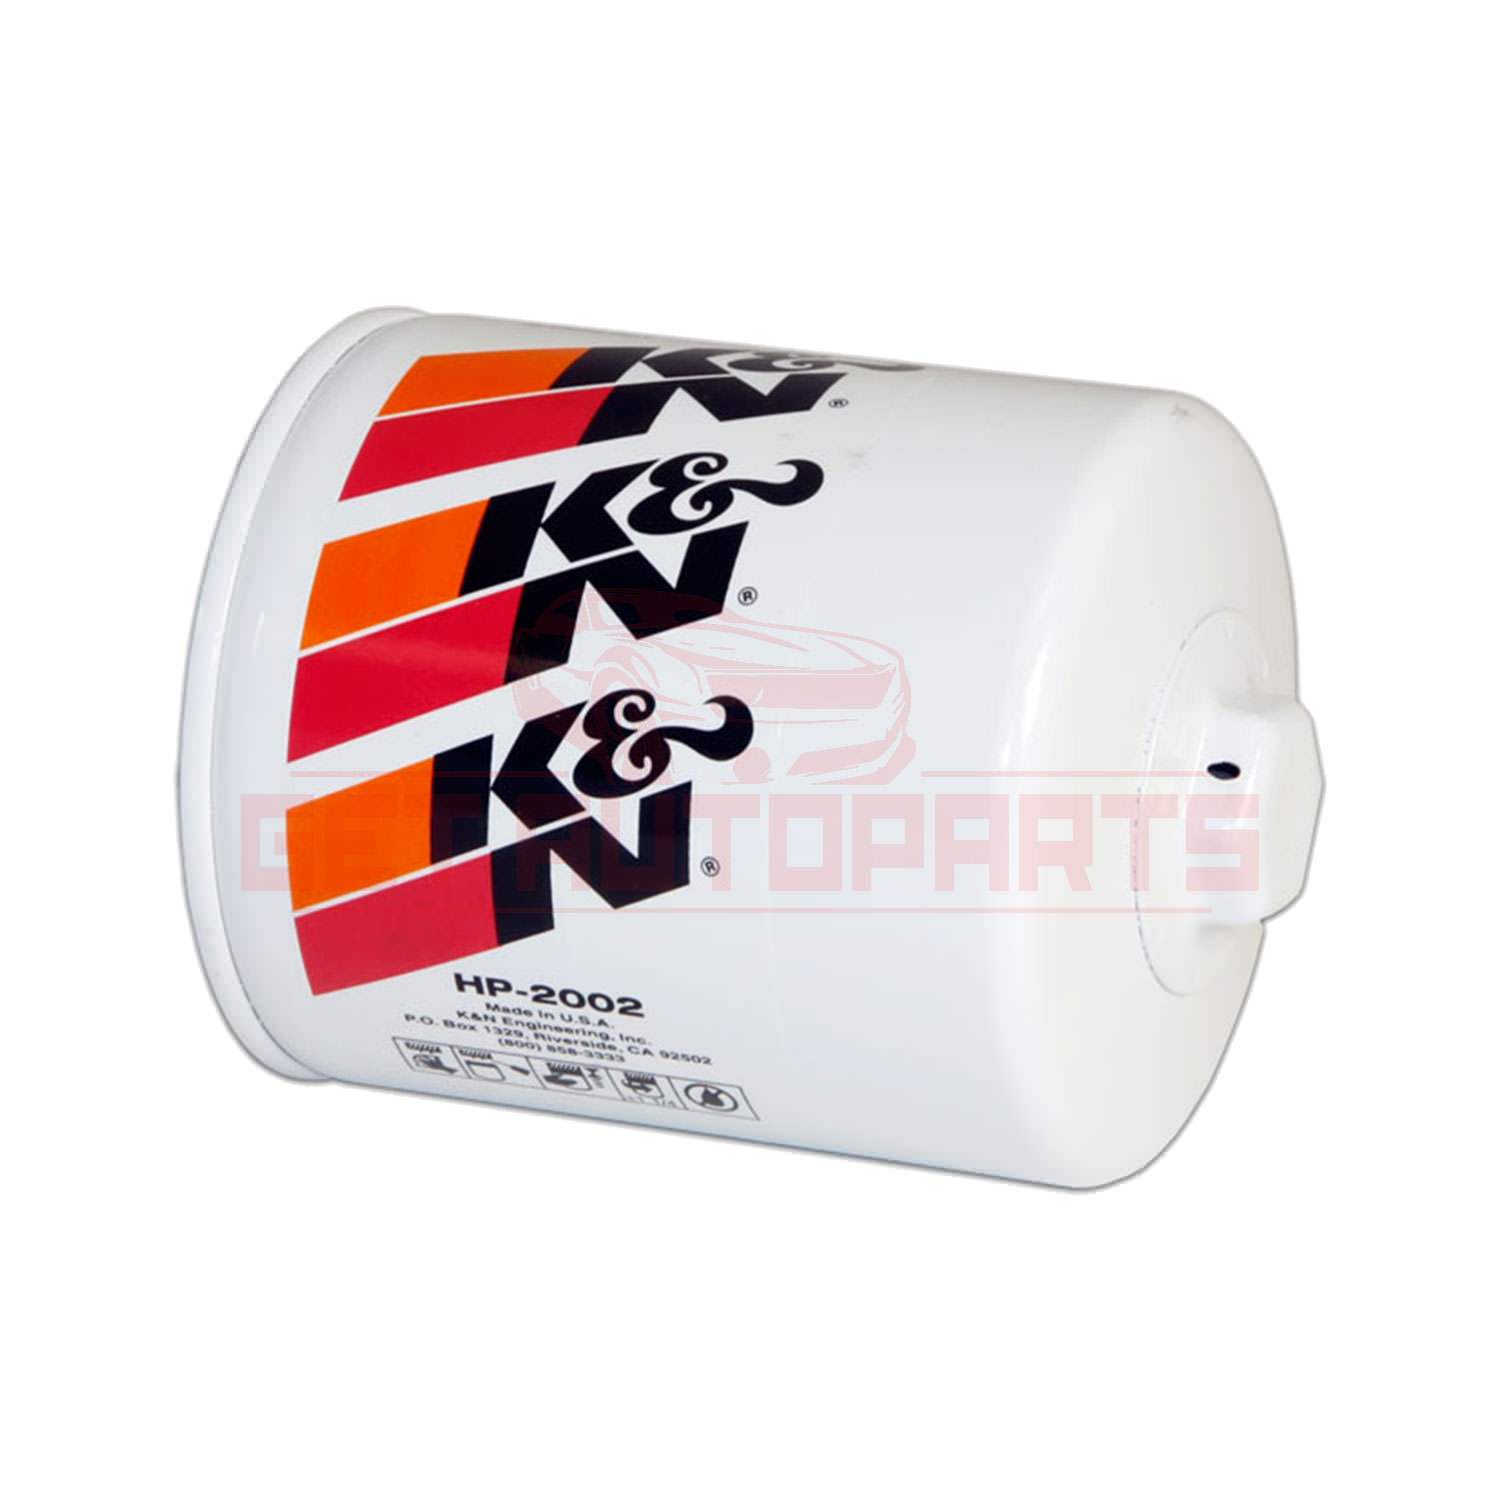 K&N Oil Filter fits GMC P35 1975-1977